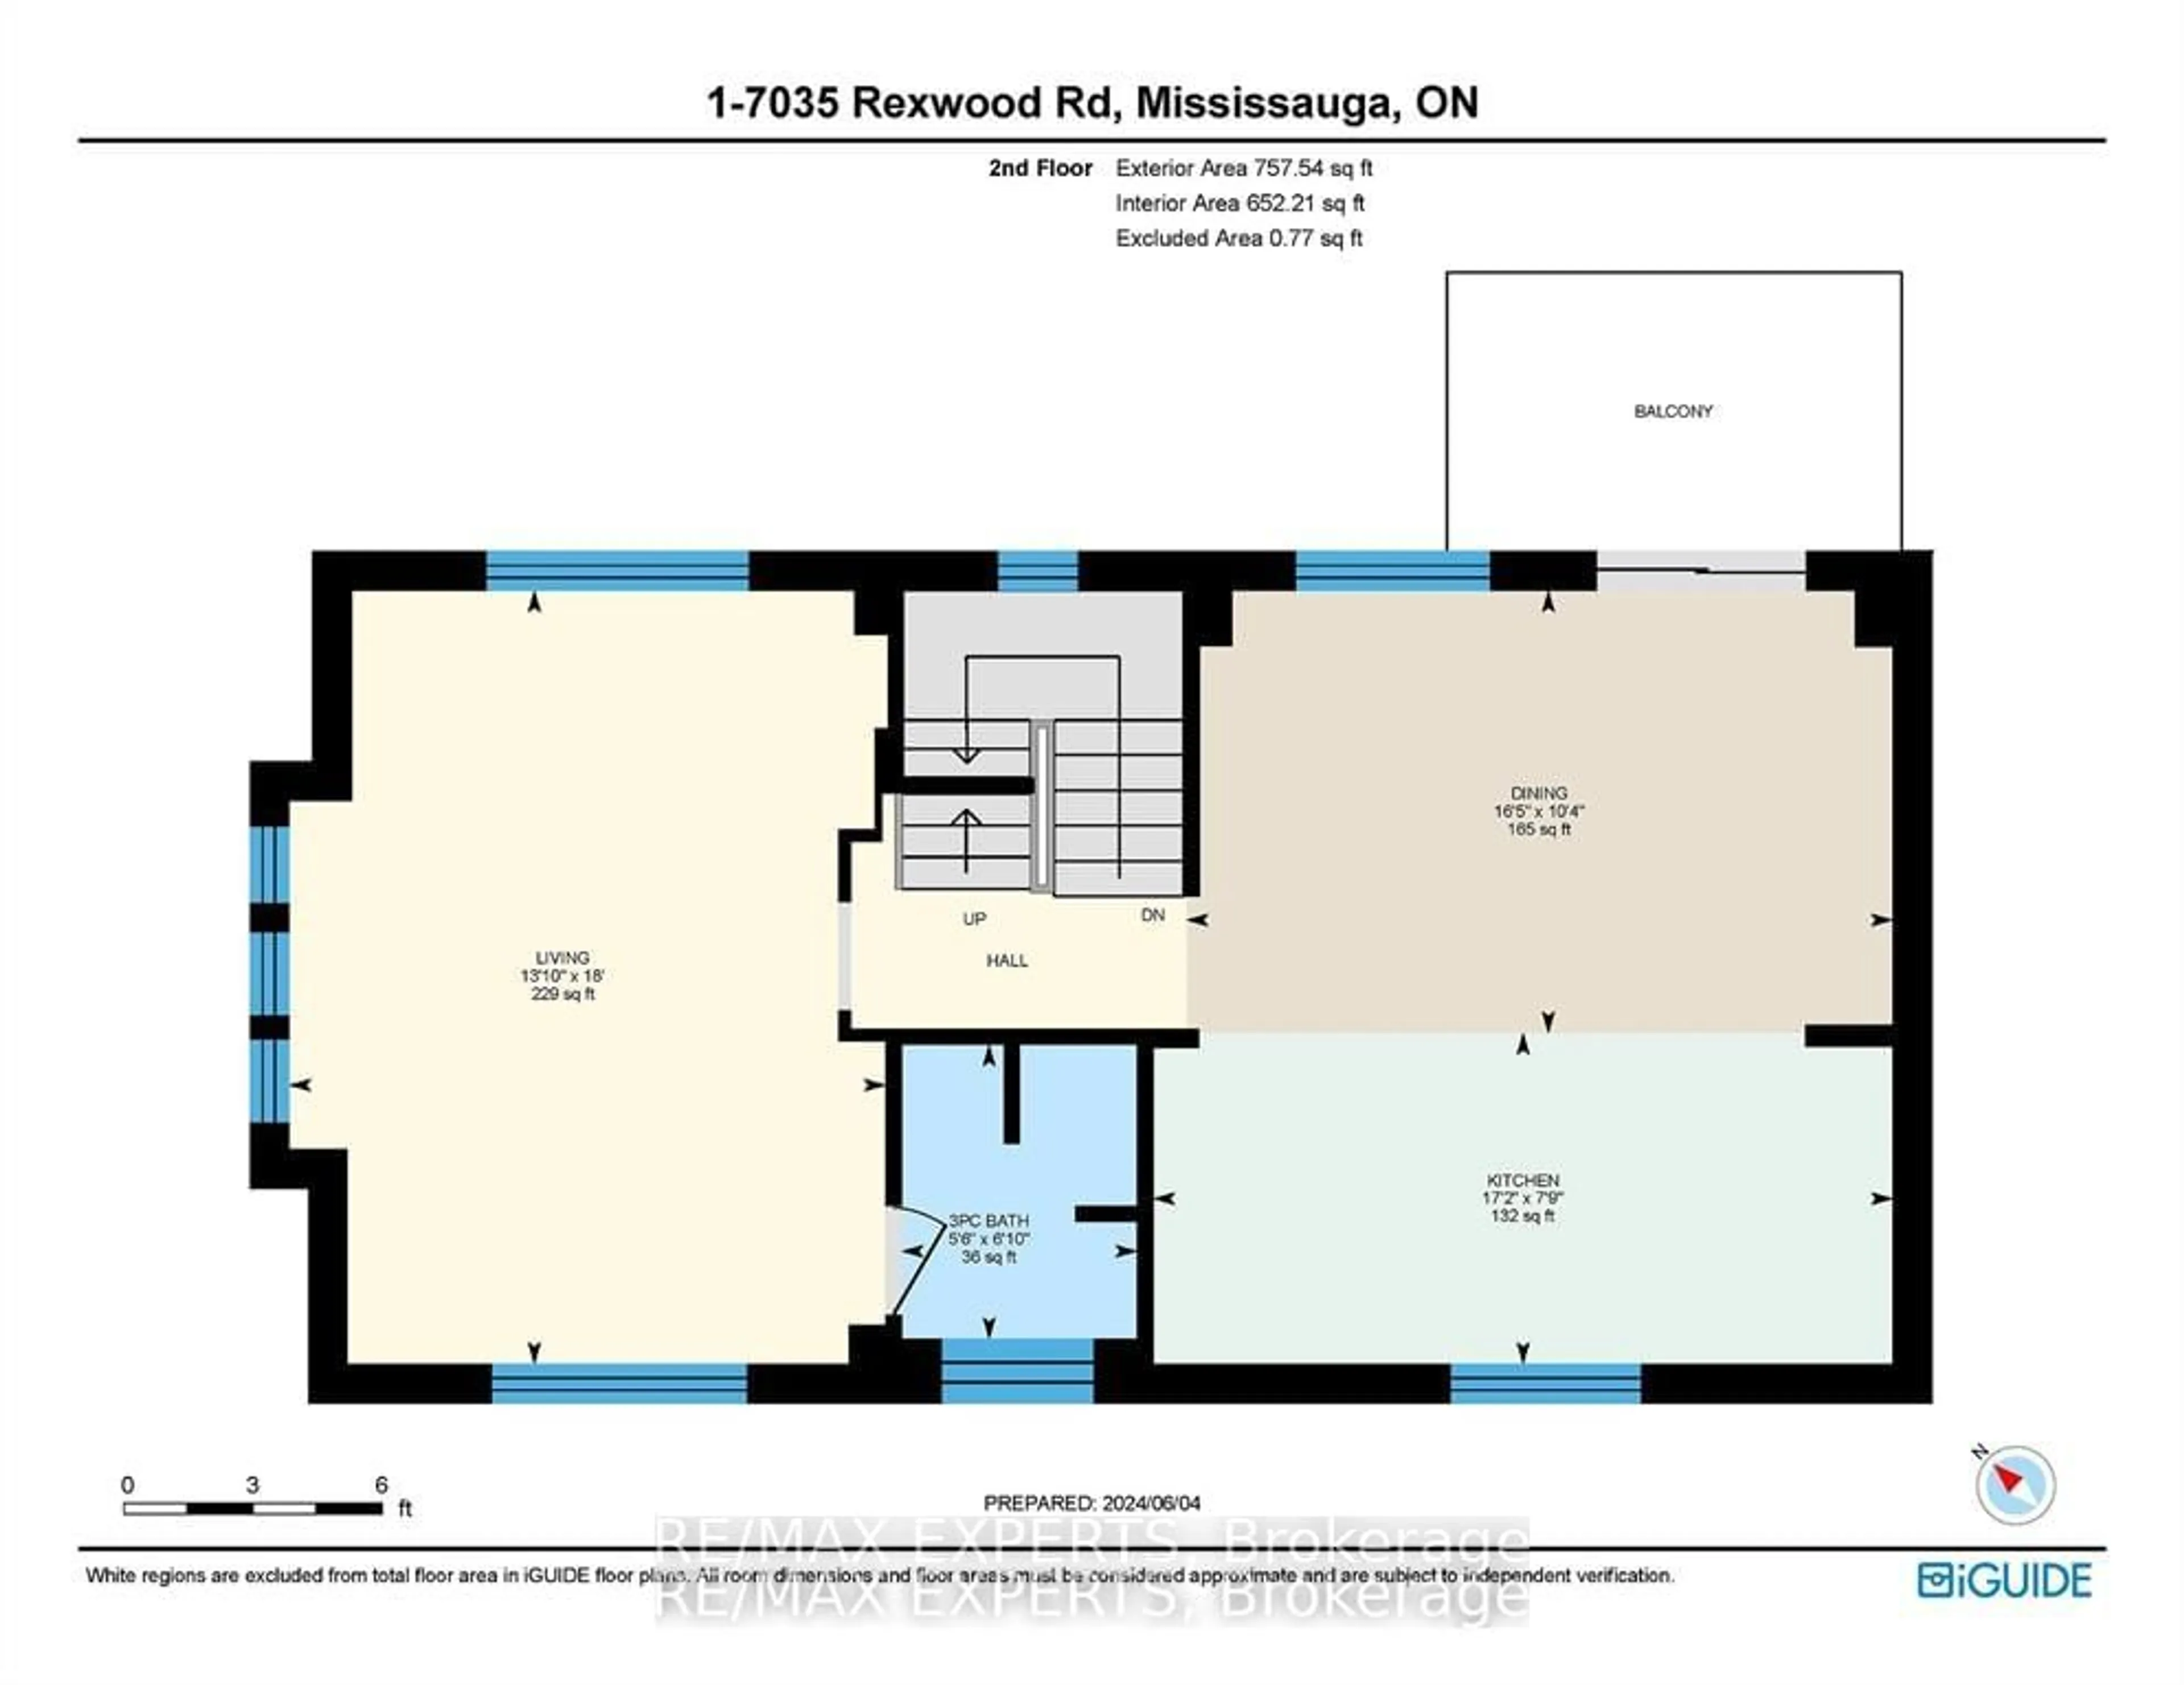 Floor plan for 7035 Rexwood Rd #Unit 1, Mississauga Ontario L4T 4M7